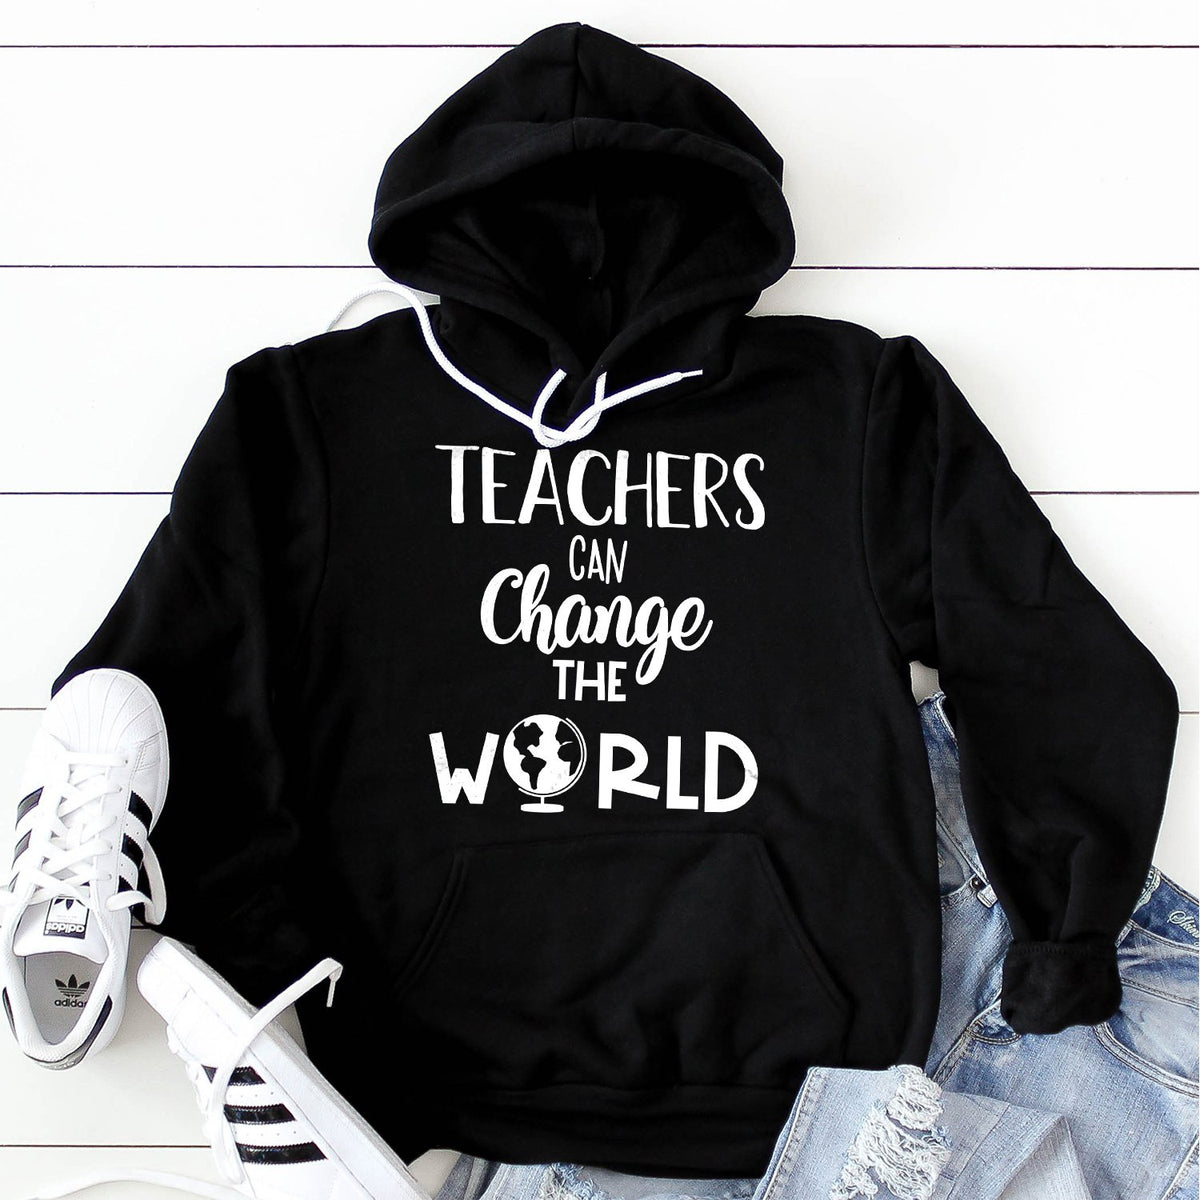 Teachers Can Change the World - Hoodie Sweatshirt